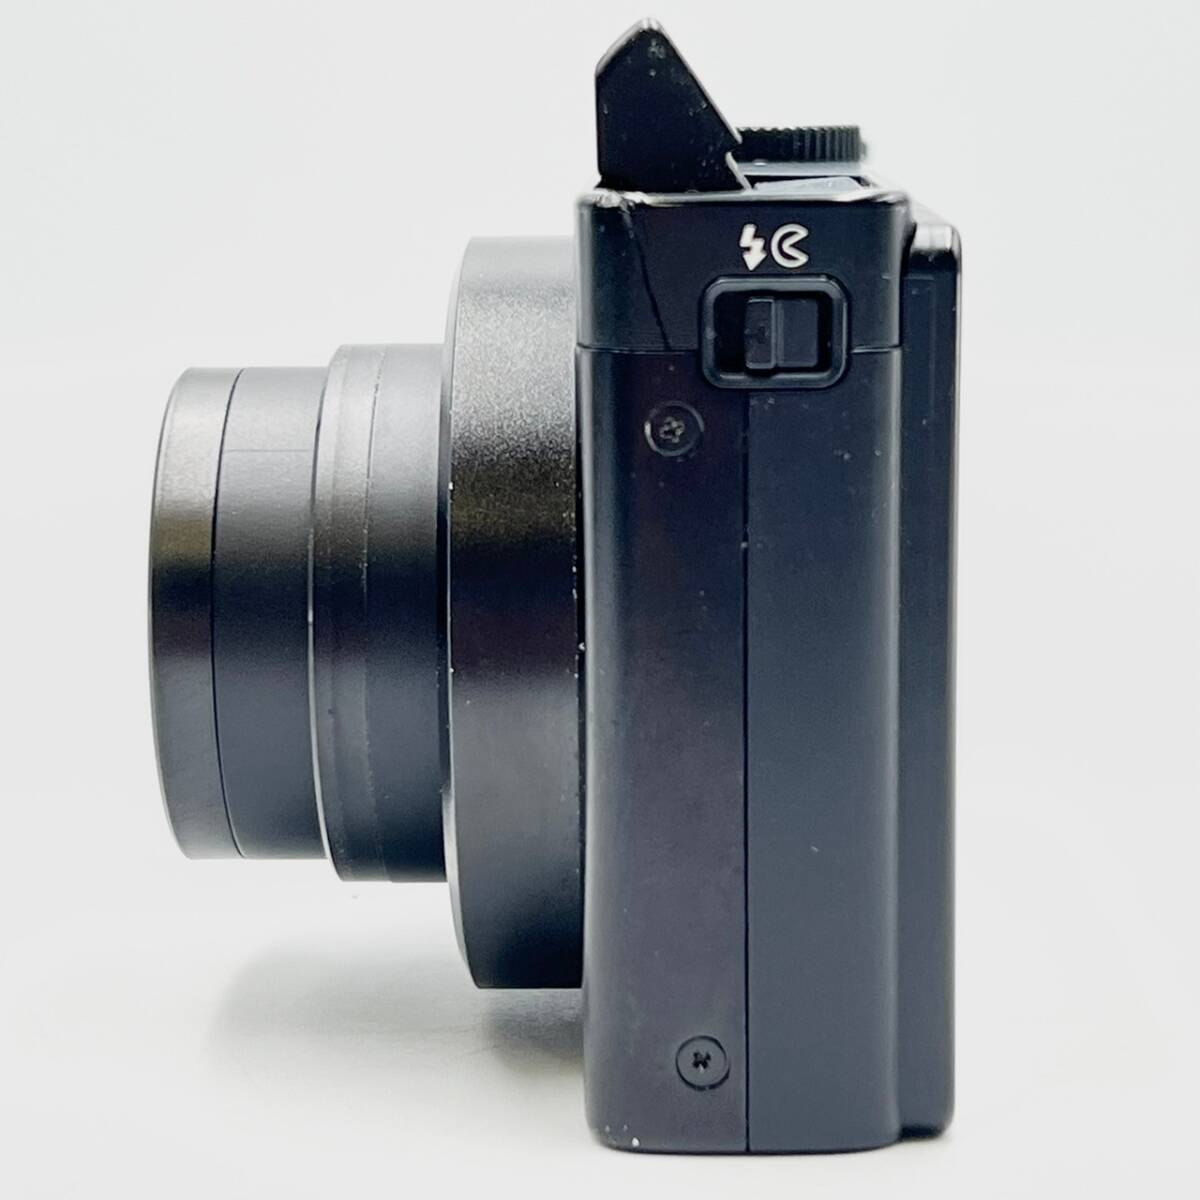 BCg249R 60 Nikon COOLPIX P300 クールピクス デジタルカメラ 4.3-17.9mm 1:1.8-4.9 SDカード2GB 充電器付 顔認識/AF自動追尾/手ブレ補正の画像4